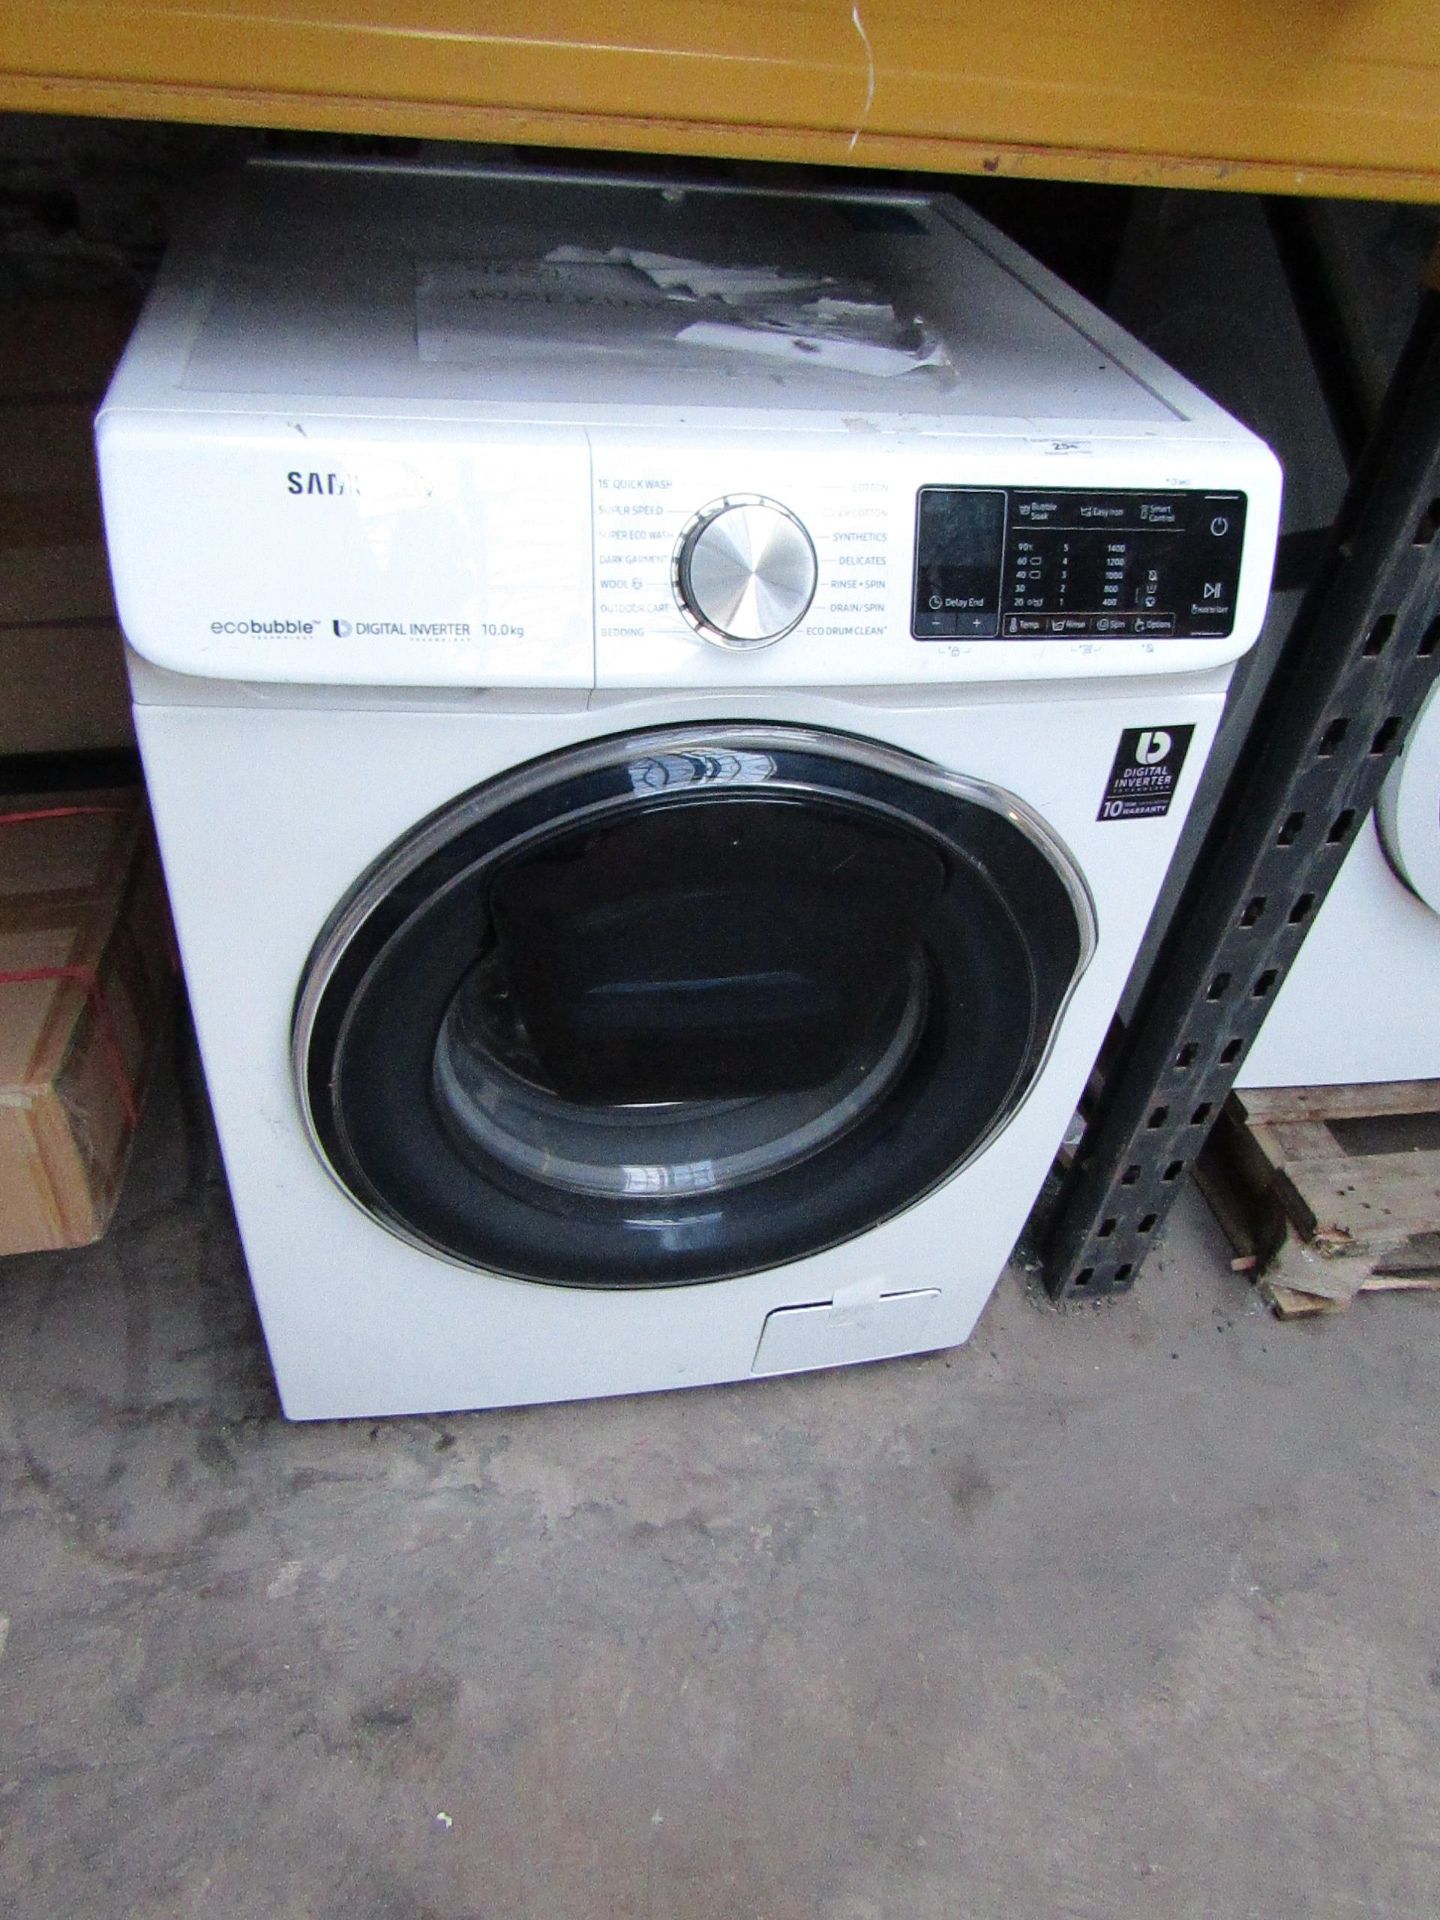 Samsung Eco Bubble Digital Inverter 10Kg washing machine, vendor suggests tested working (no